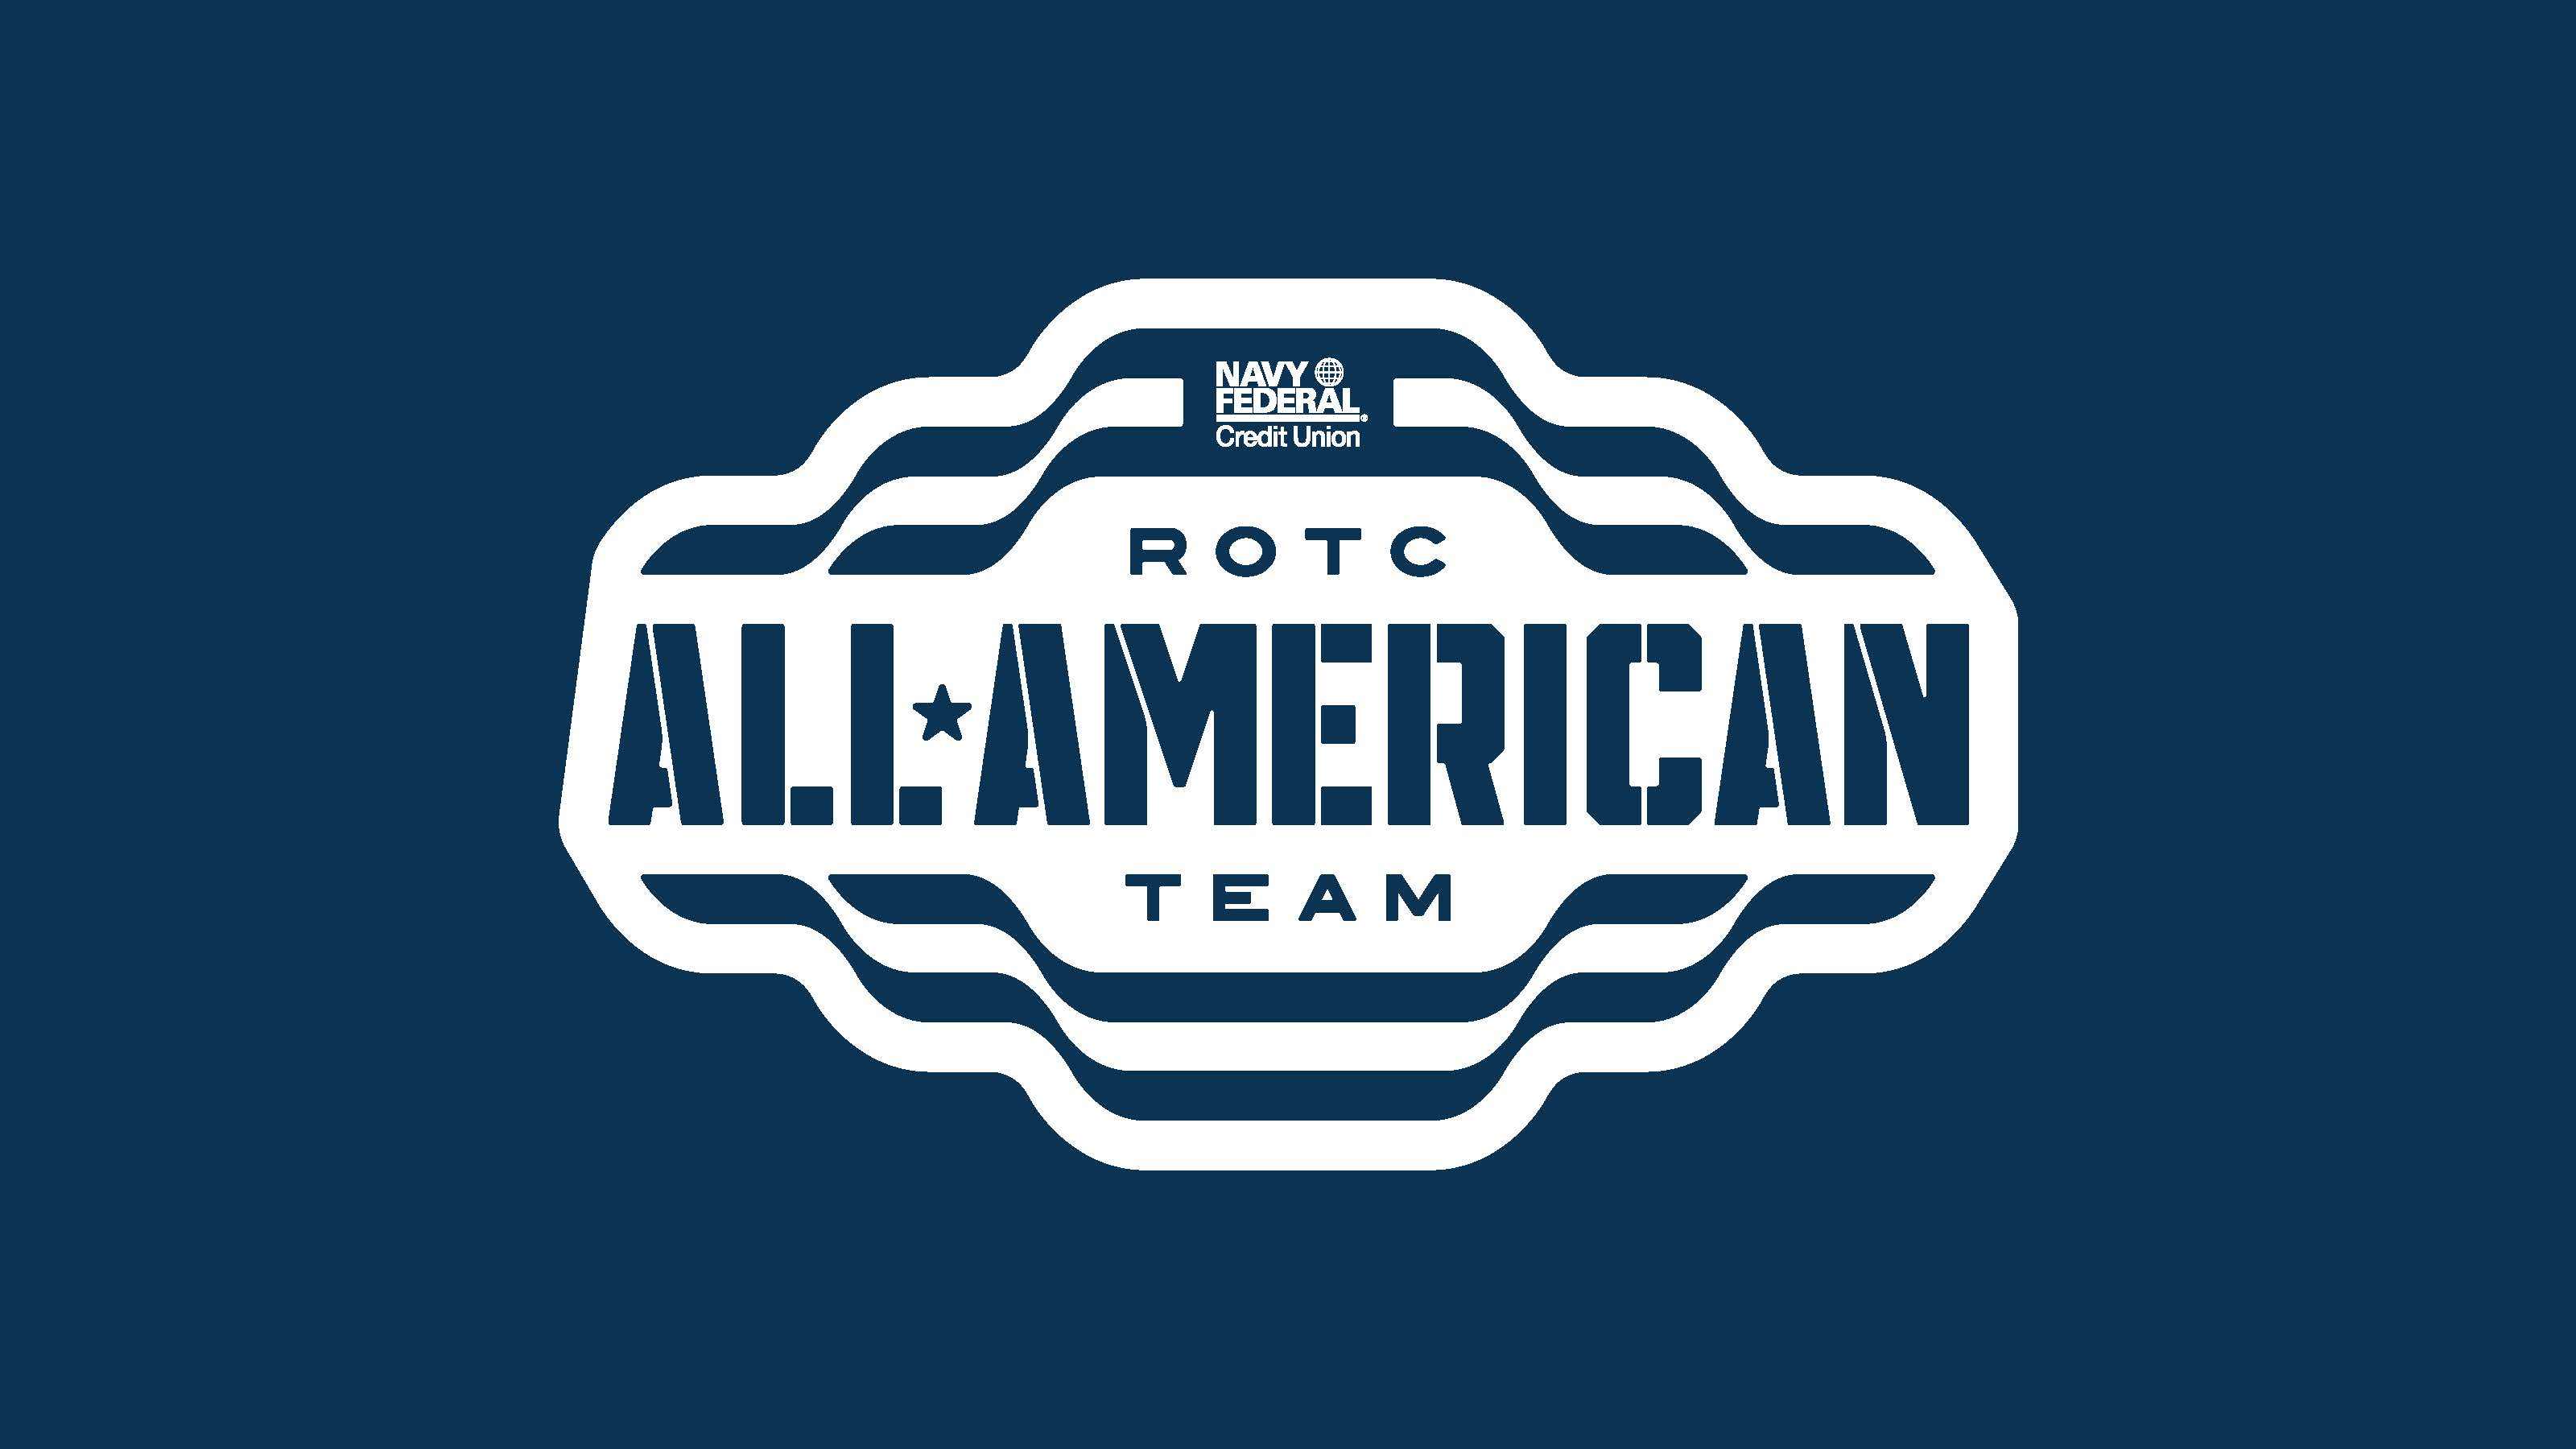 Nfcu Logo - Navy Federal Announces ROTC All American Team Scholarship As Part